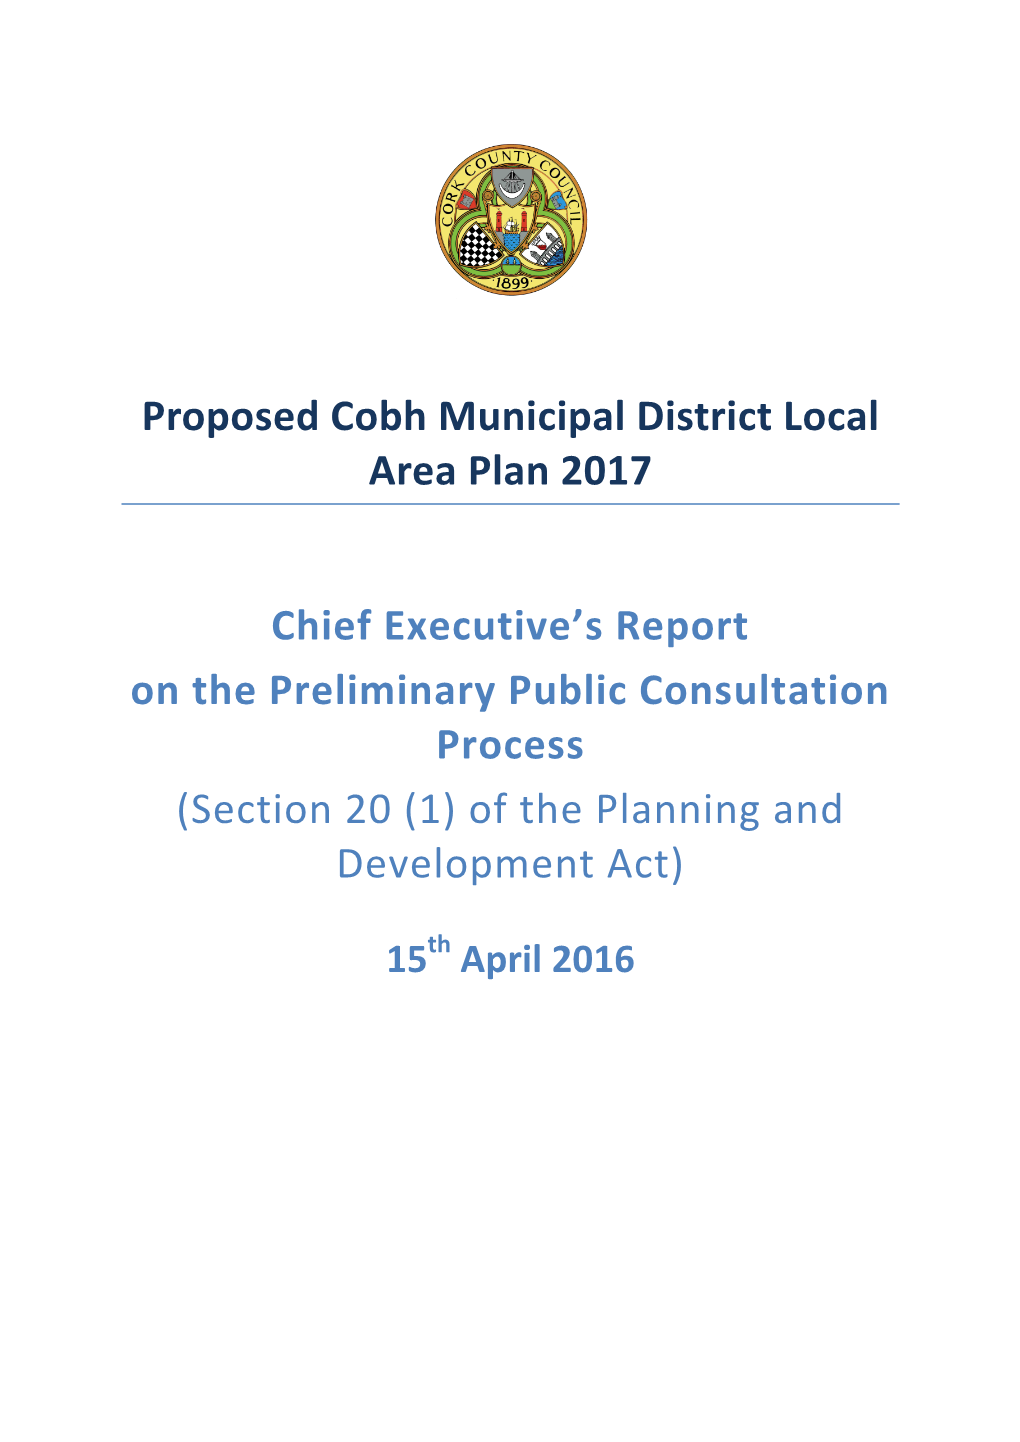 Chief Executive's Report on the Preliminary Public Consultation